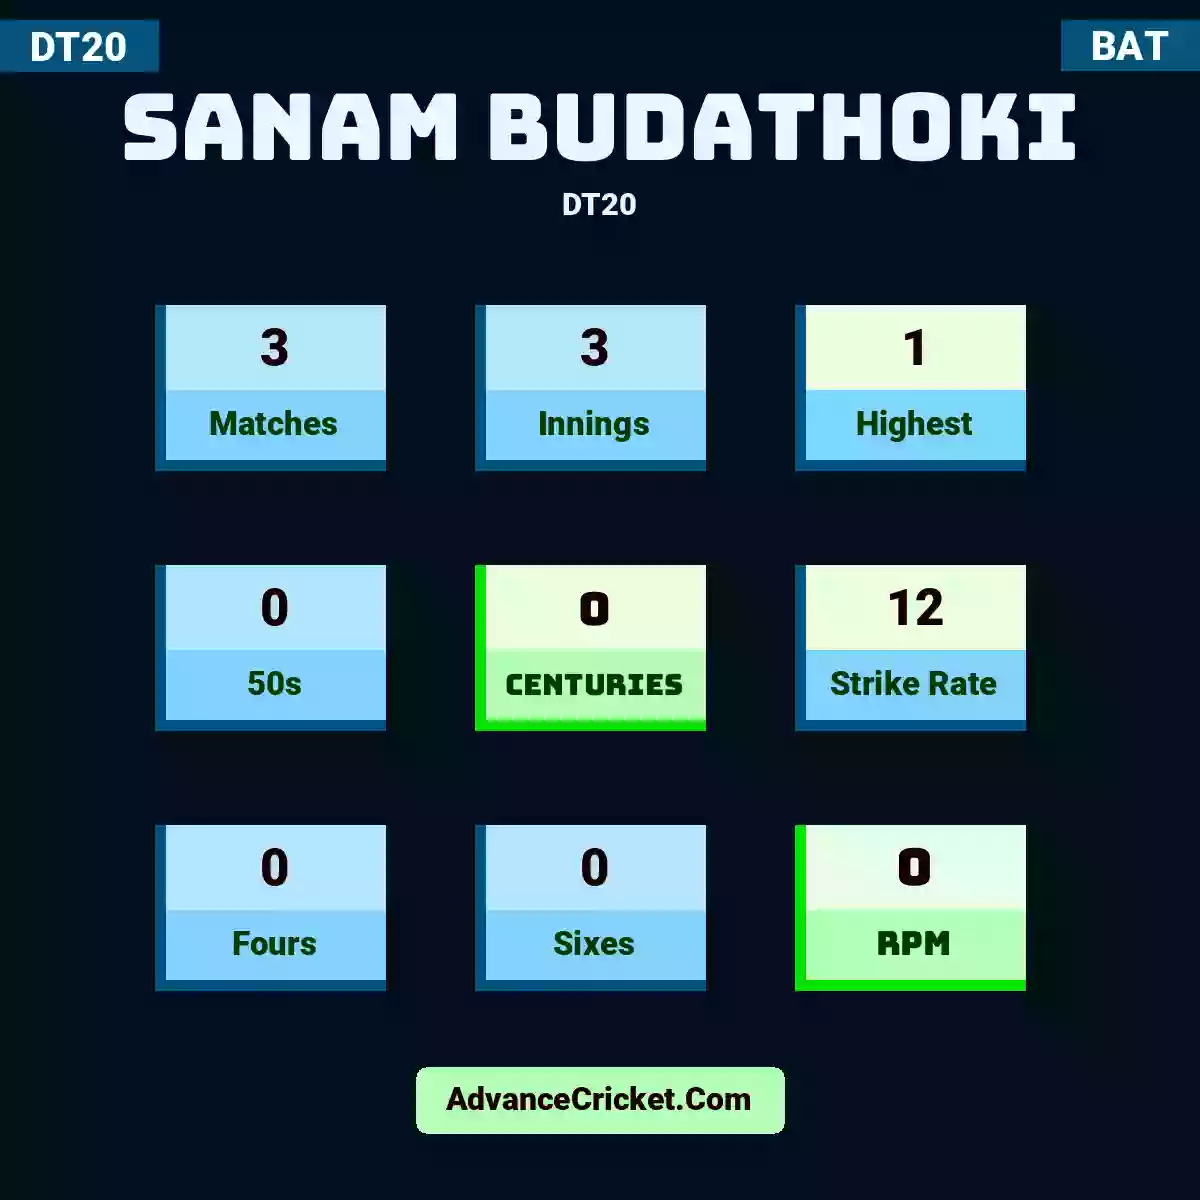 Sanam Budathoki DT20 , Sanam Budathoki played 3 matches, scored 1 runs as highest, 0 half-centuries, and 0 centuries, with a strike rate of 12. S.Budathoki hit 0 fours and 0 sixes, with an RPM of 0.